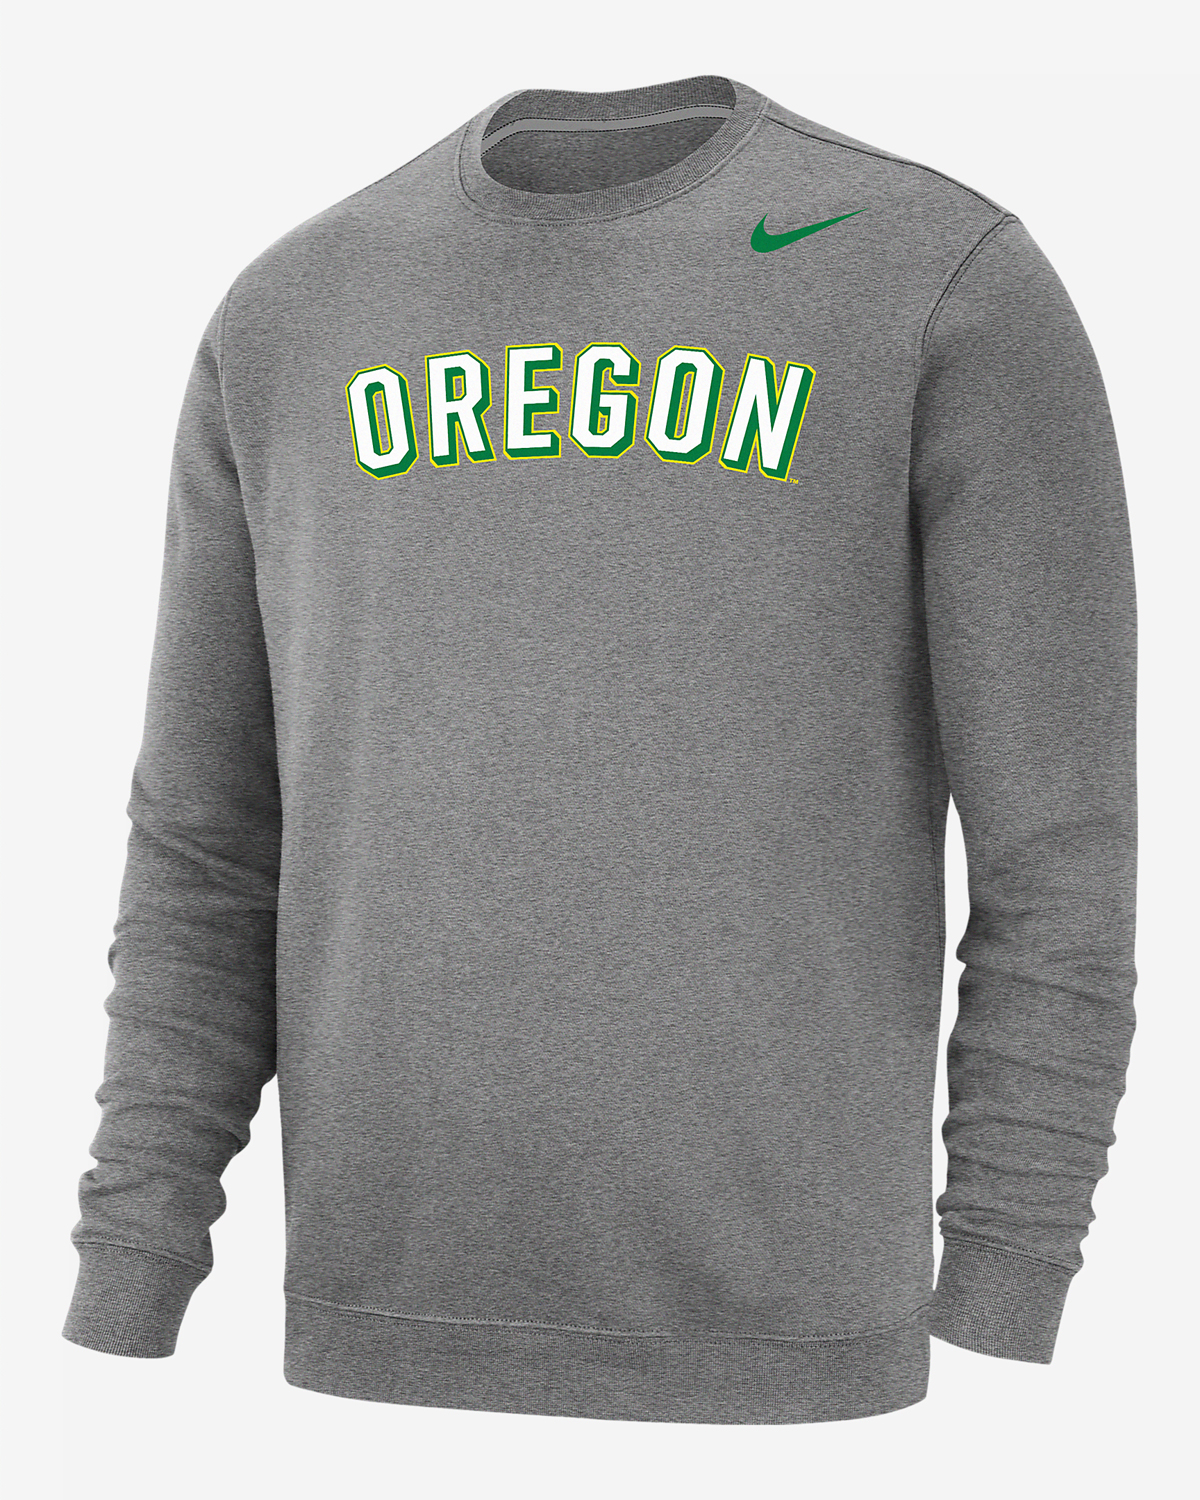 Nike-Dunk-Low-Oregon-Ducks-Sweatshirt